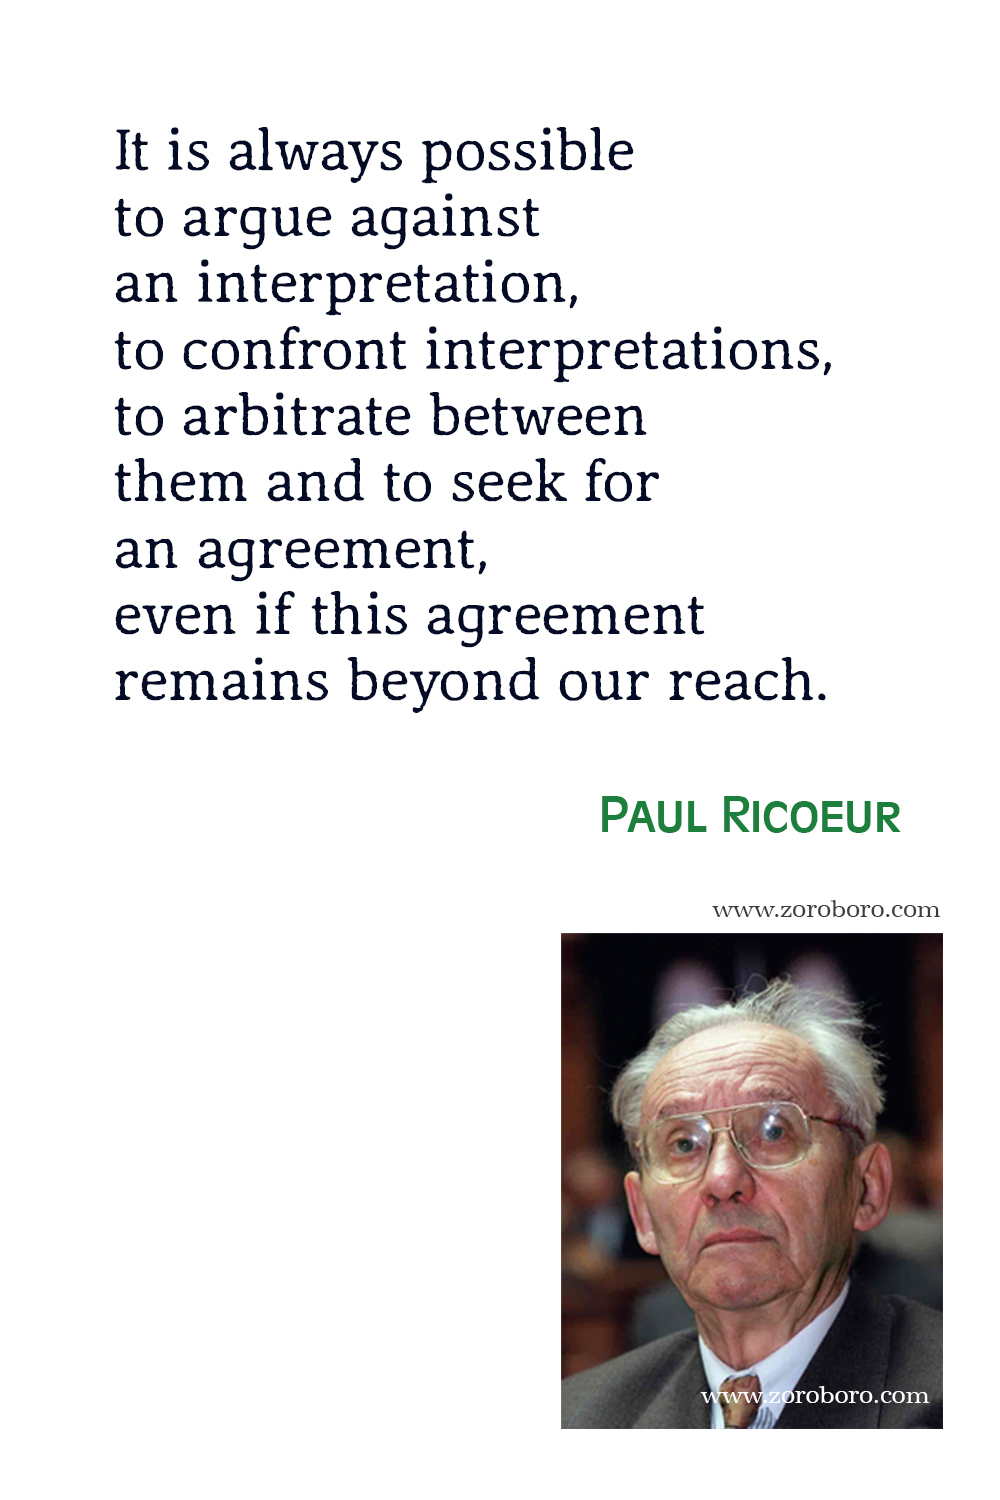 Paul Ricoeur Quotes, Paul Ricoeur Theory, Paul Ricoeur Books Quotes, Paul Ricoeur Quotes.